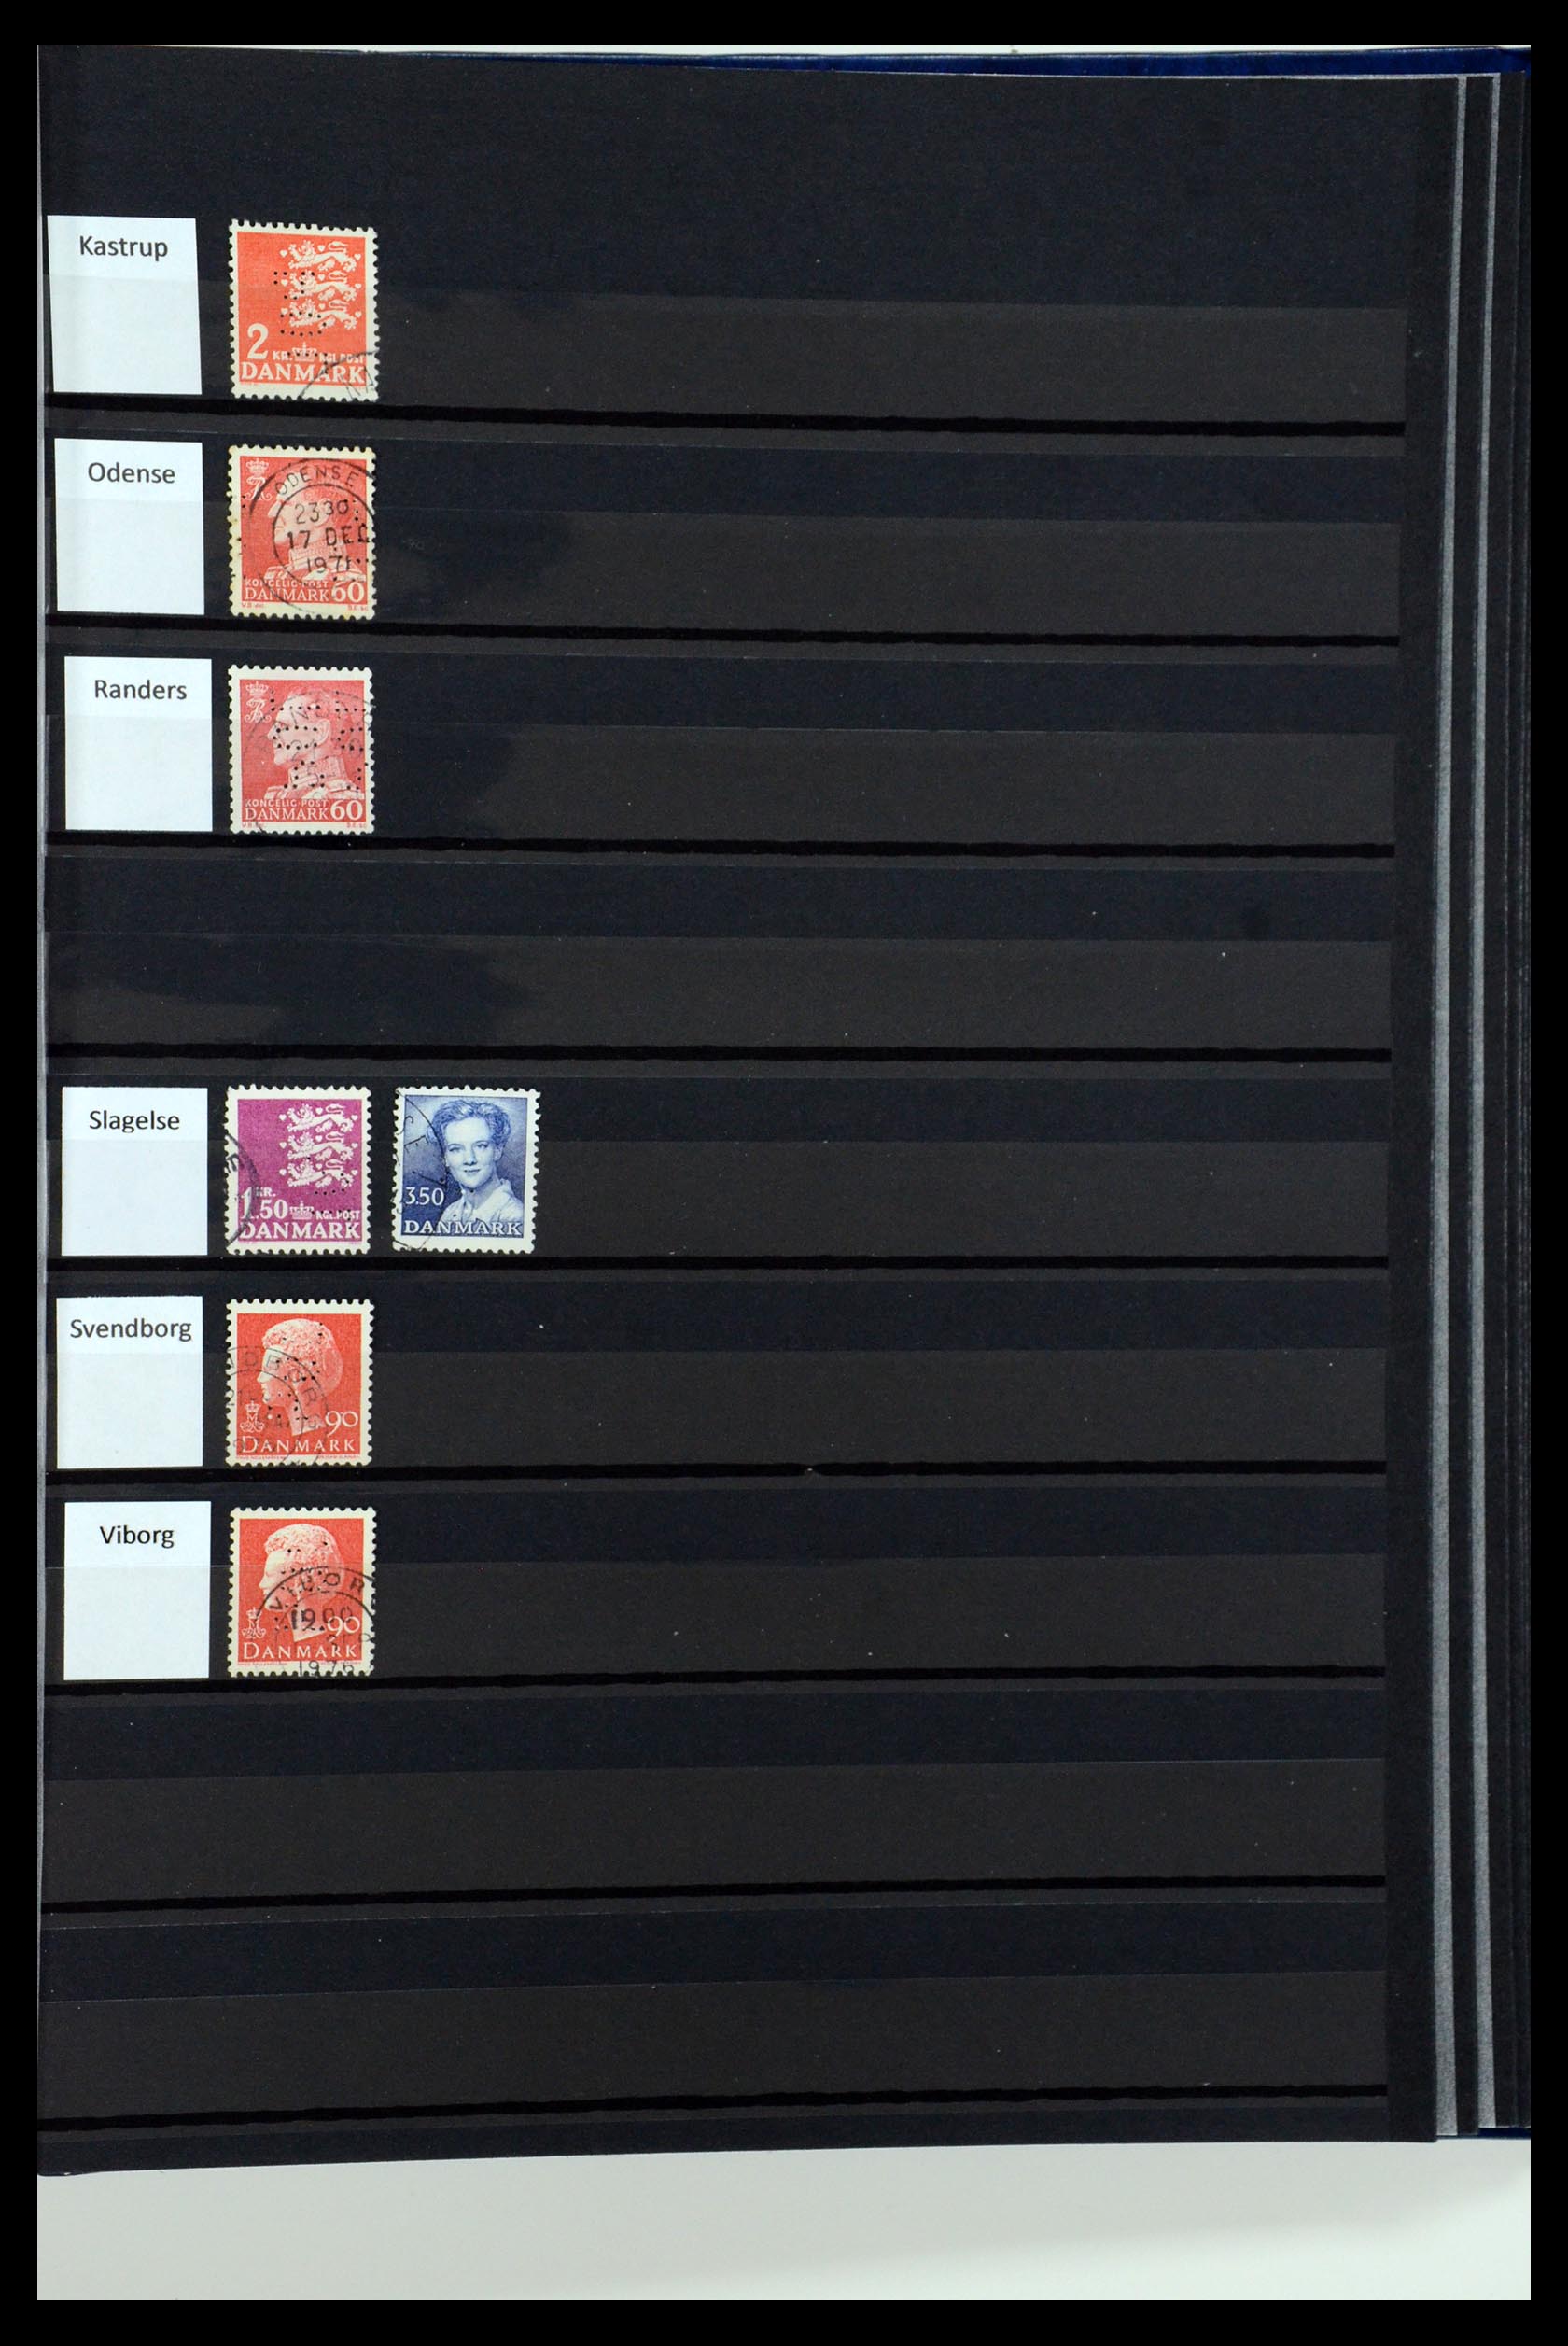 36396 102 - Stamp collection 36396 Denmark perfins.